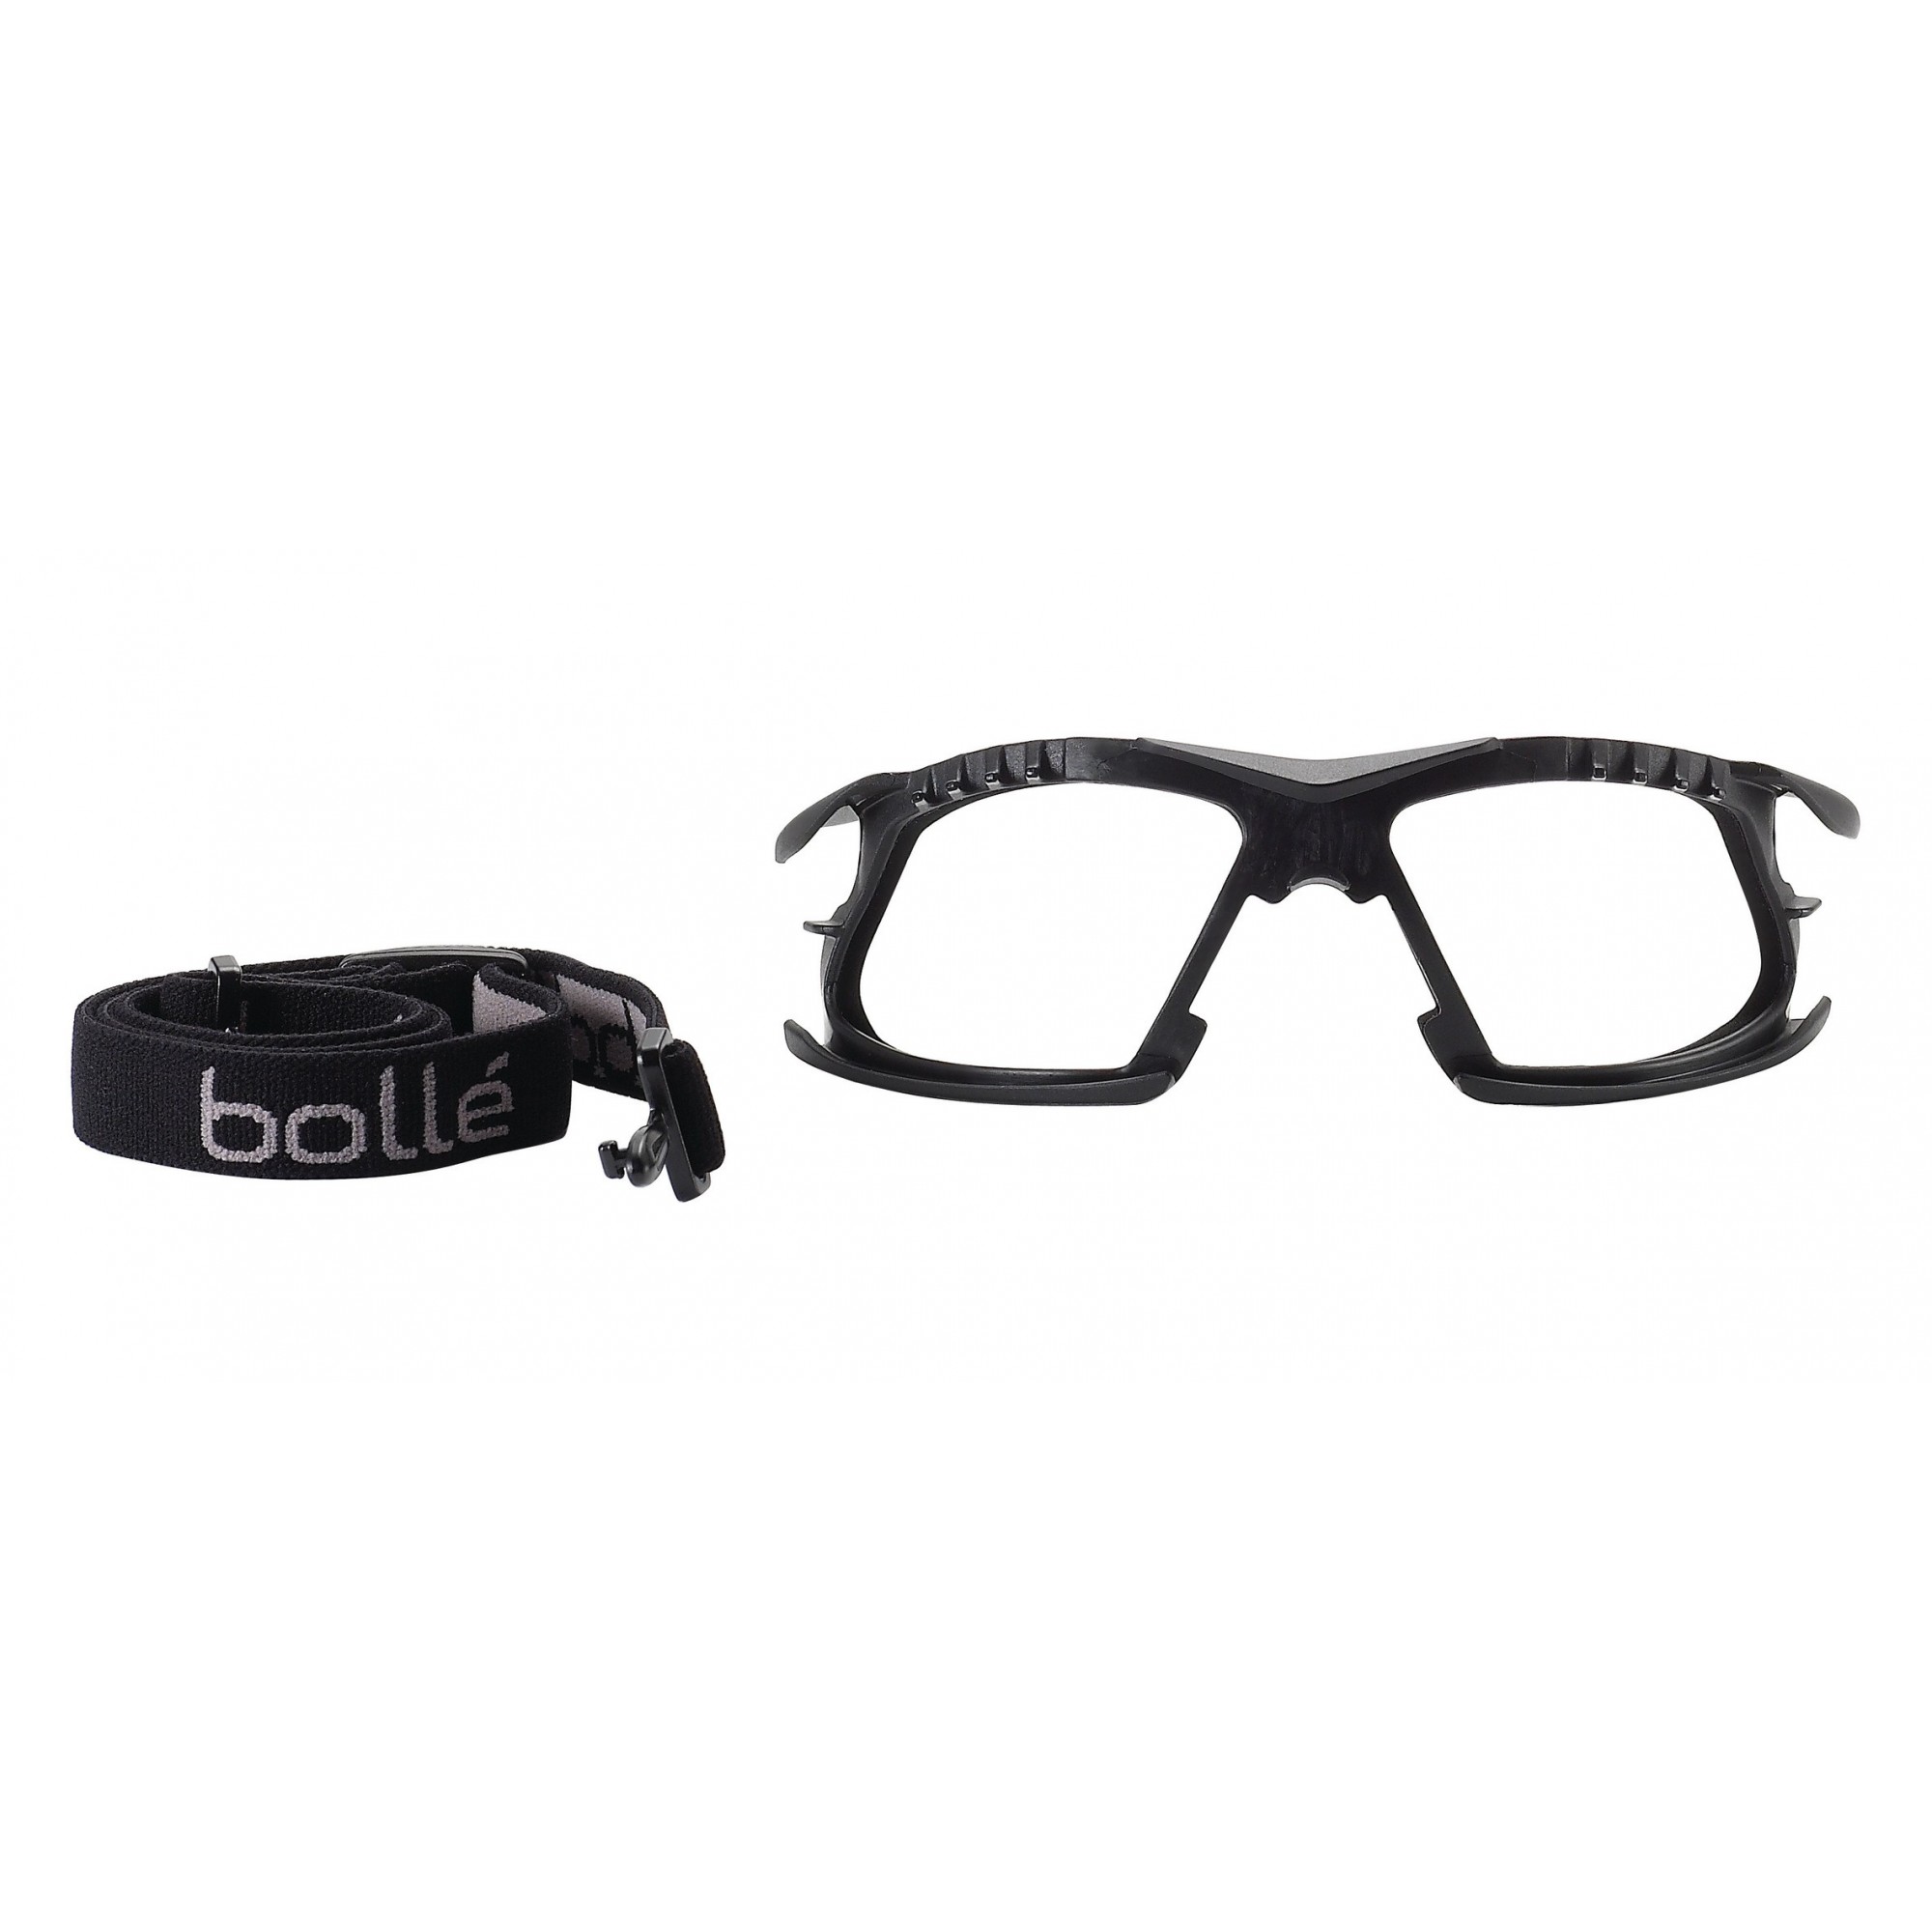 Kit mousse et tresse pour lunettes Rush - BOLLE - BOLLE SAFETY